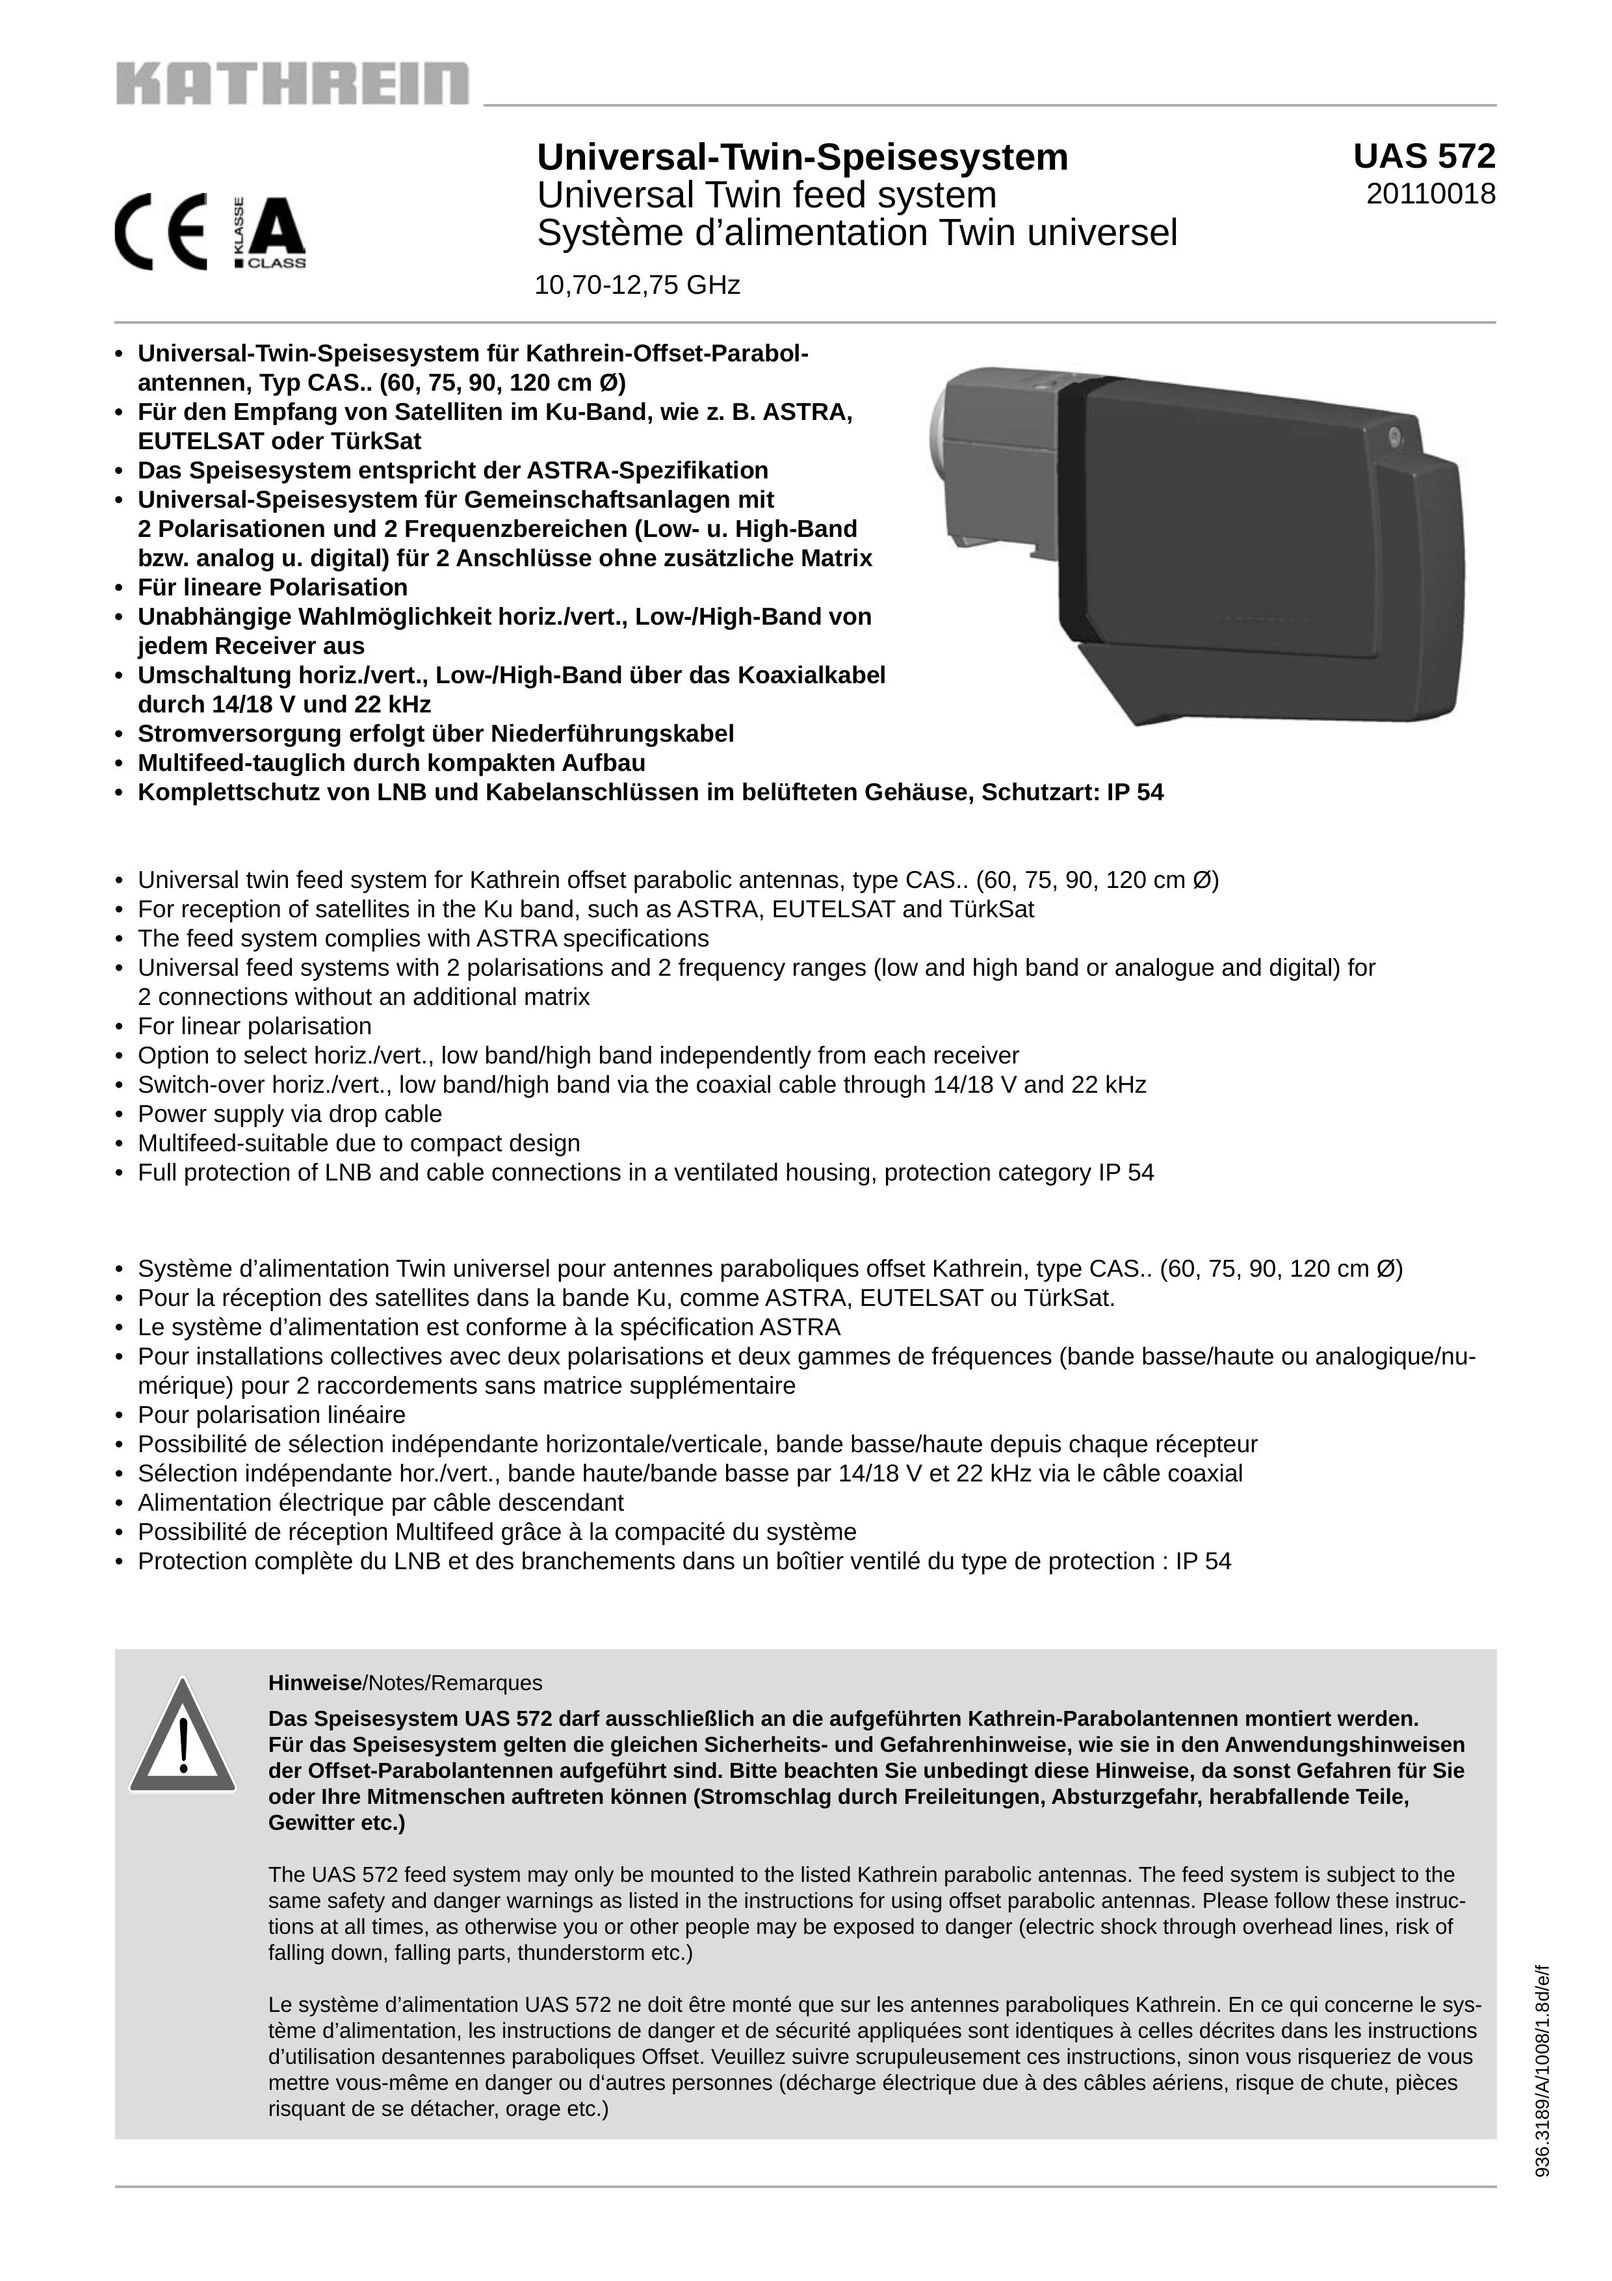 Kathrein UAS 572 Car Satellite TV System User Manual